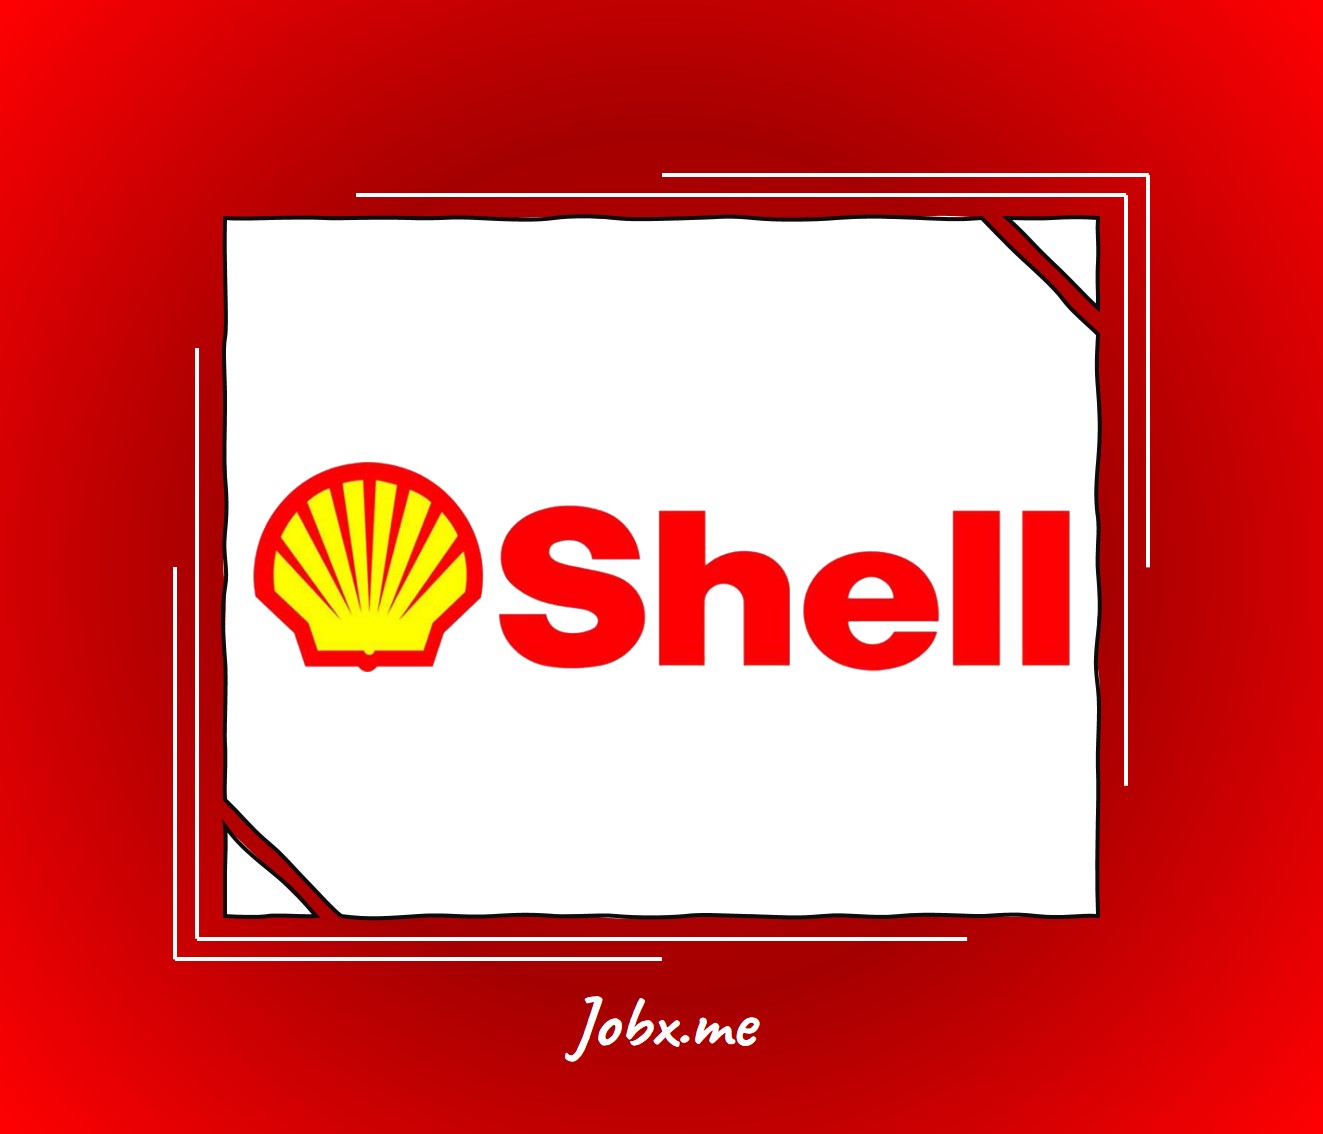 Shell Careers